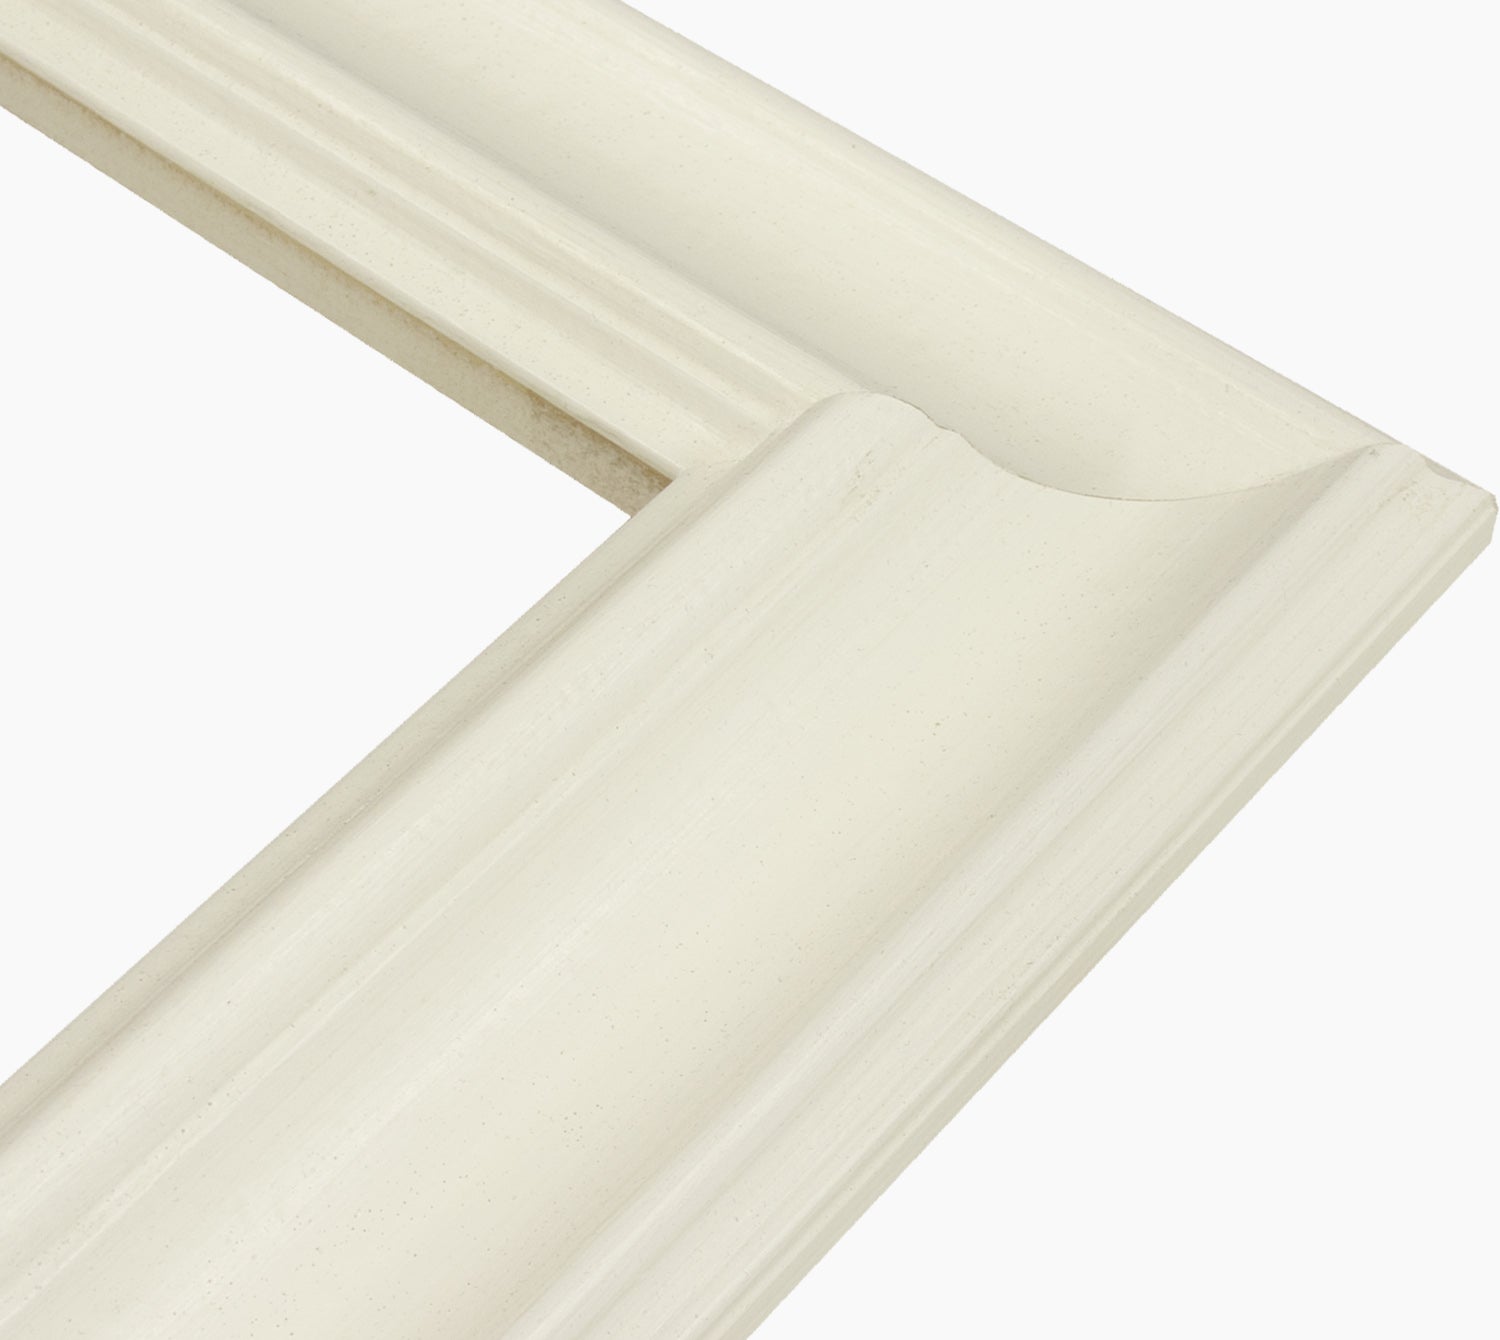 739.899 cadre en bois blanc avec de la cire mesure de profil 80x45 mm Lombarda cornici S.n.c.